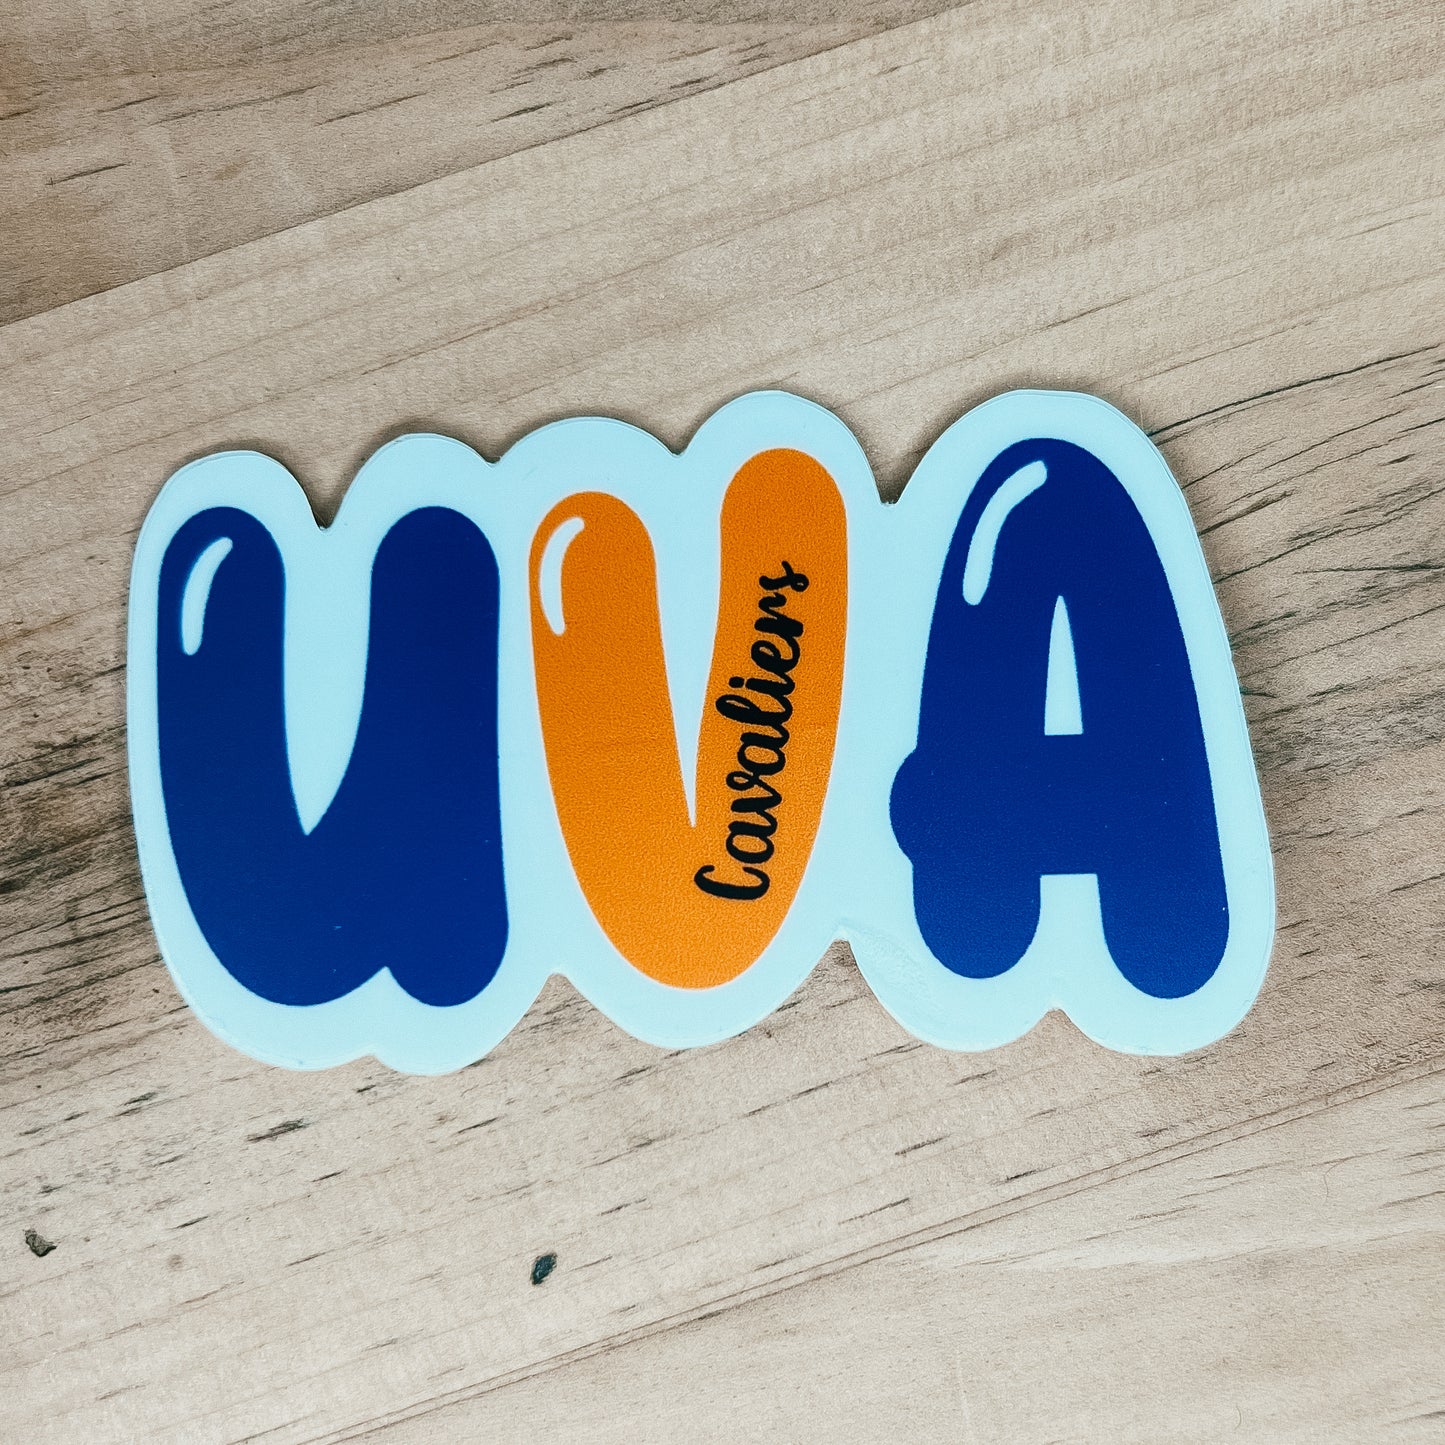 UVA Stickers